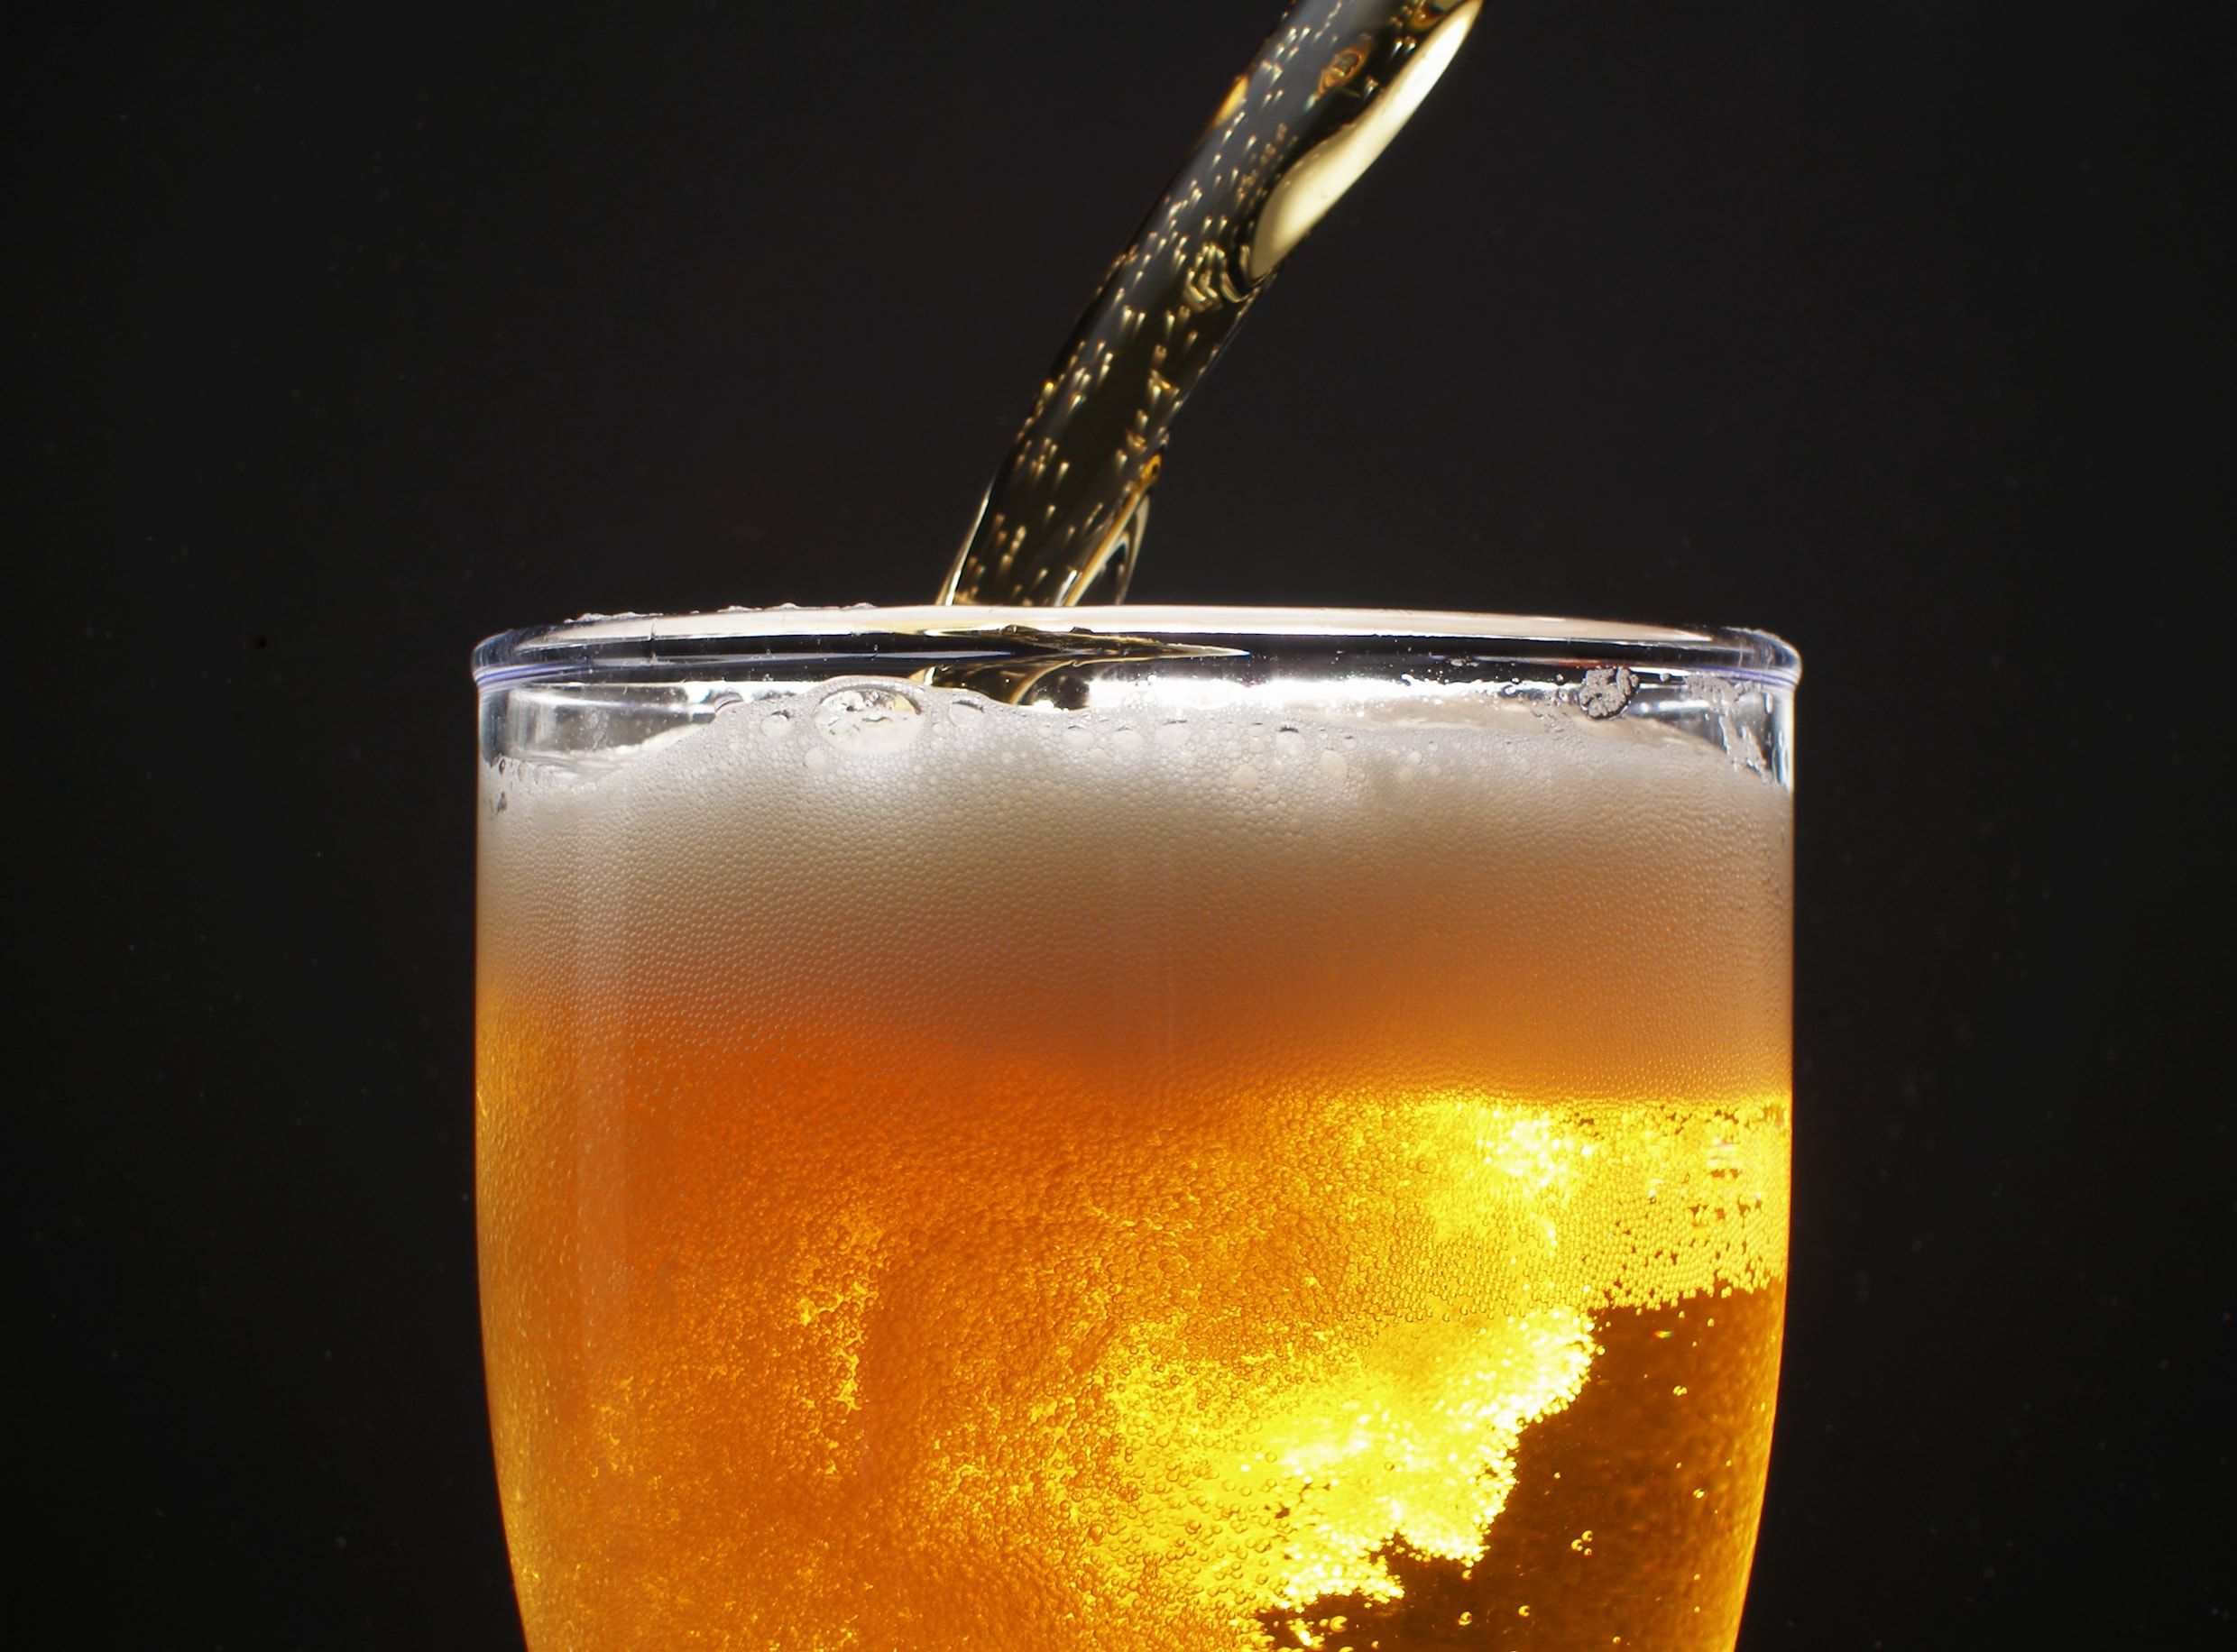 Grootschalige studie: "Ieder glas alcohol vormt gezondheidsrisico"